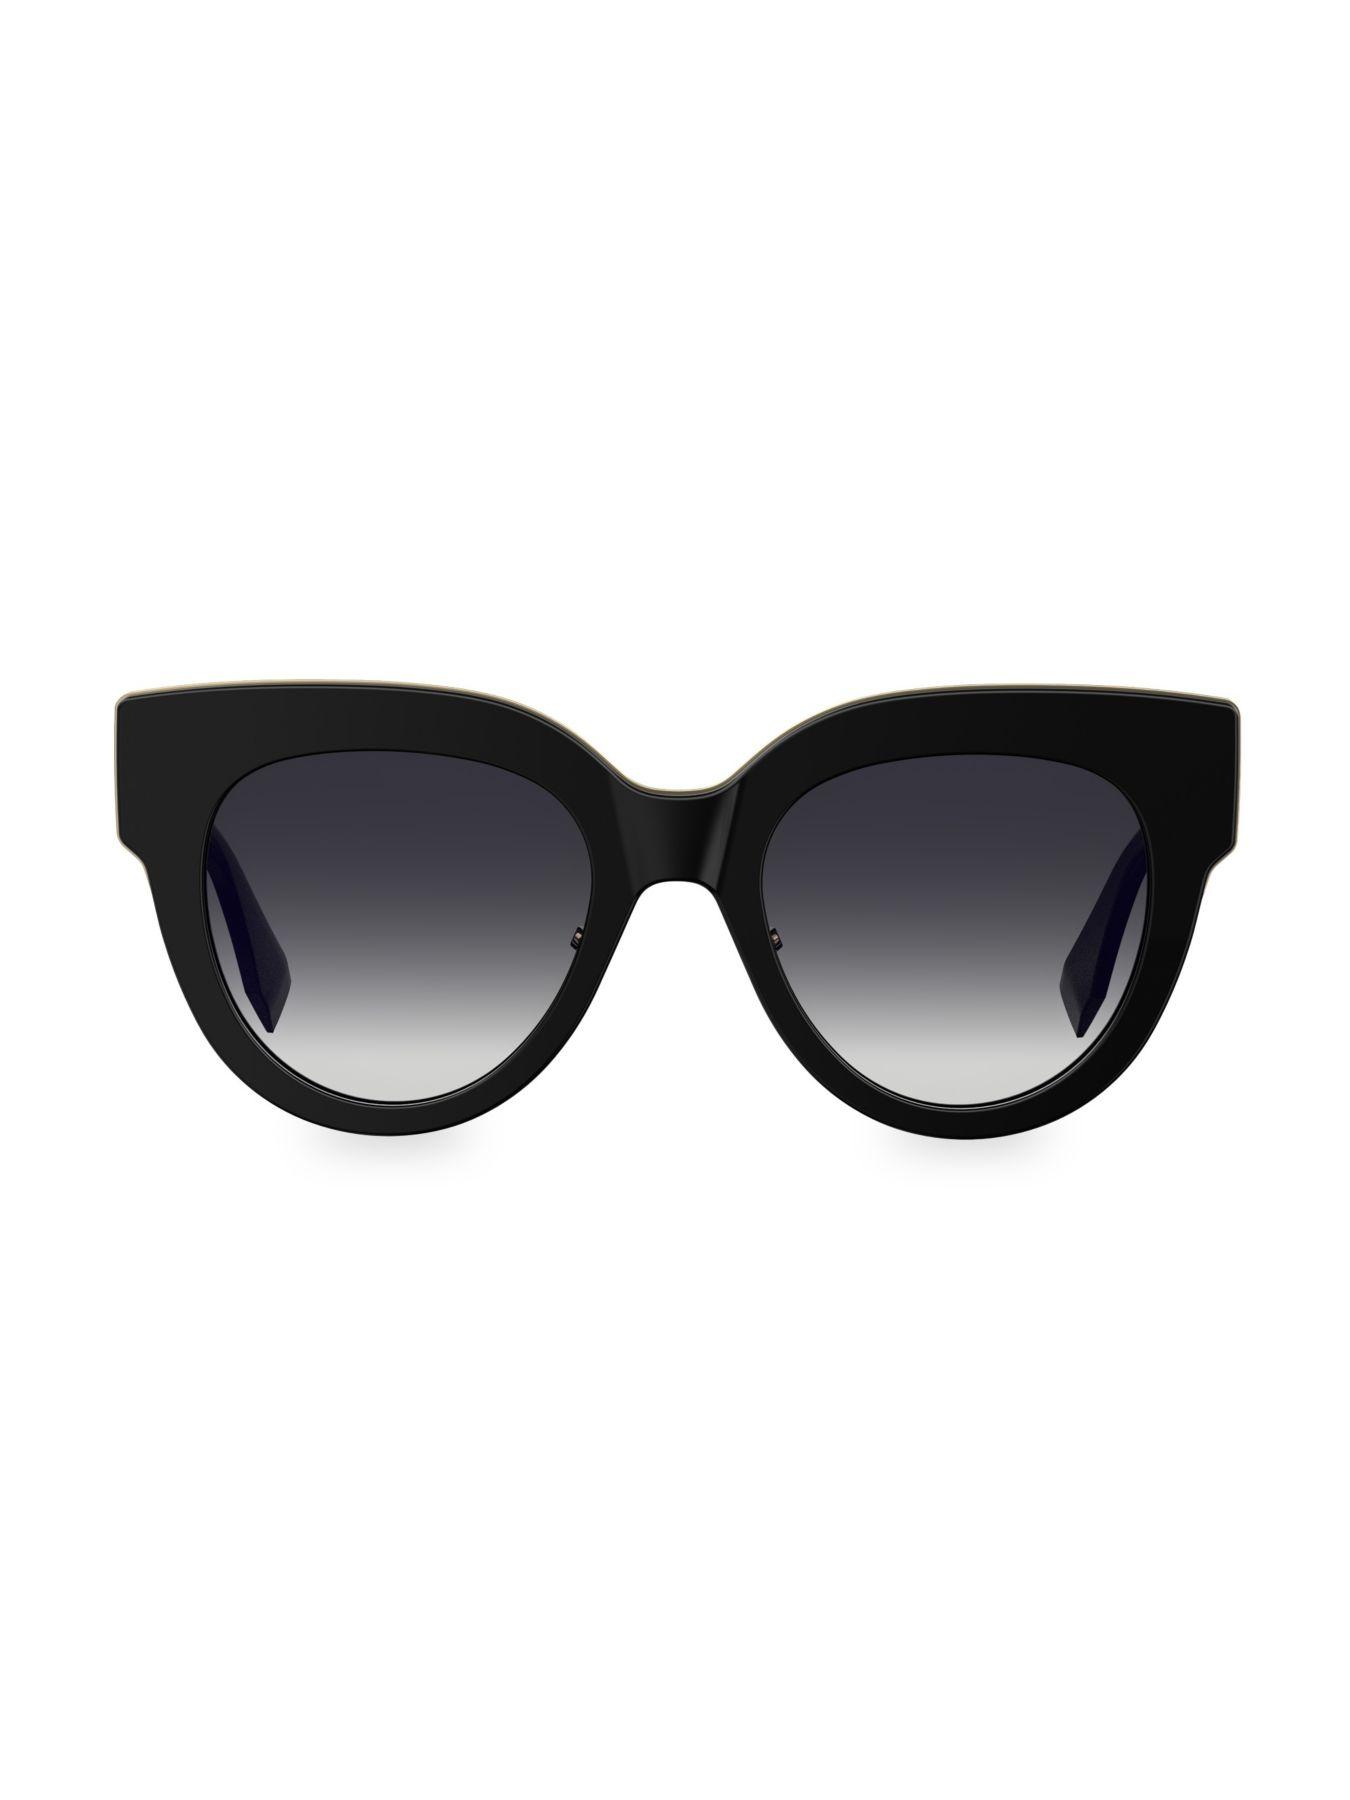 Fendi 51mm Cat Eye Sunglasses in Black - Lyst